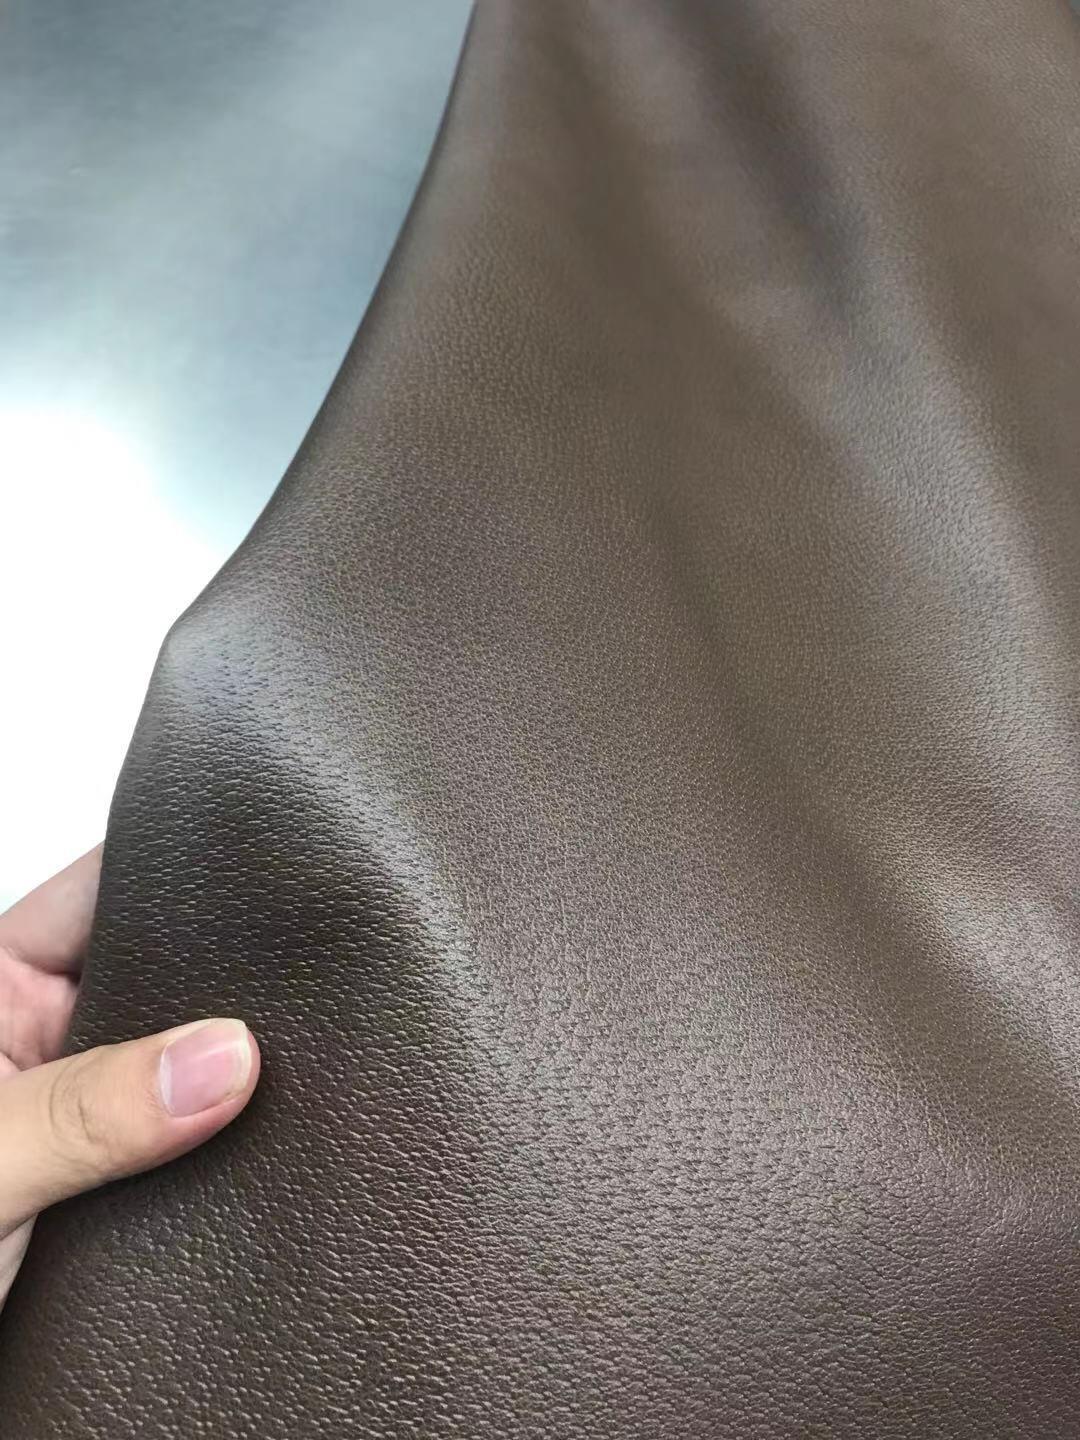 pigskin leather